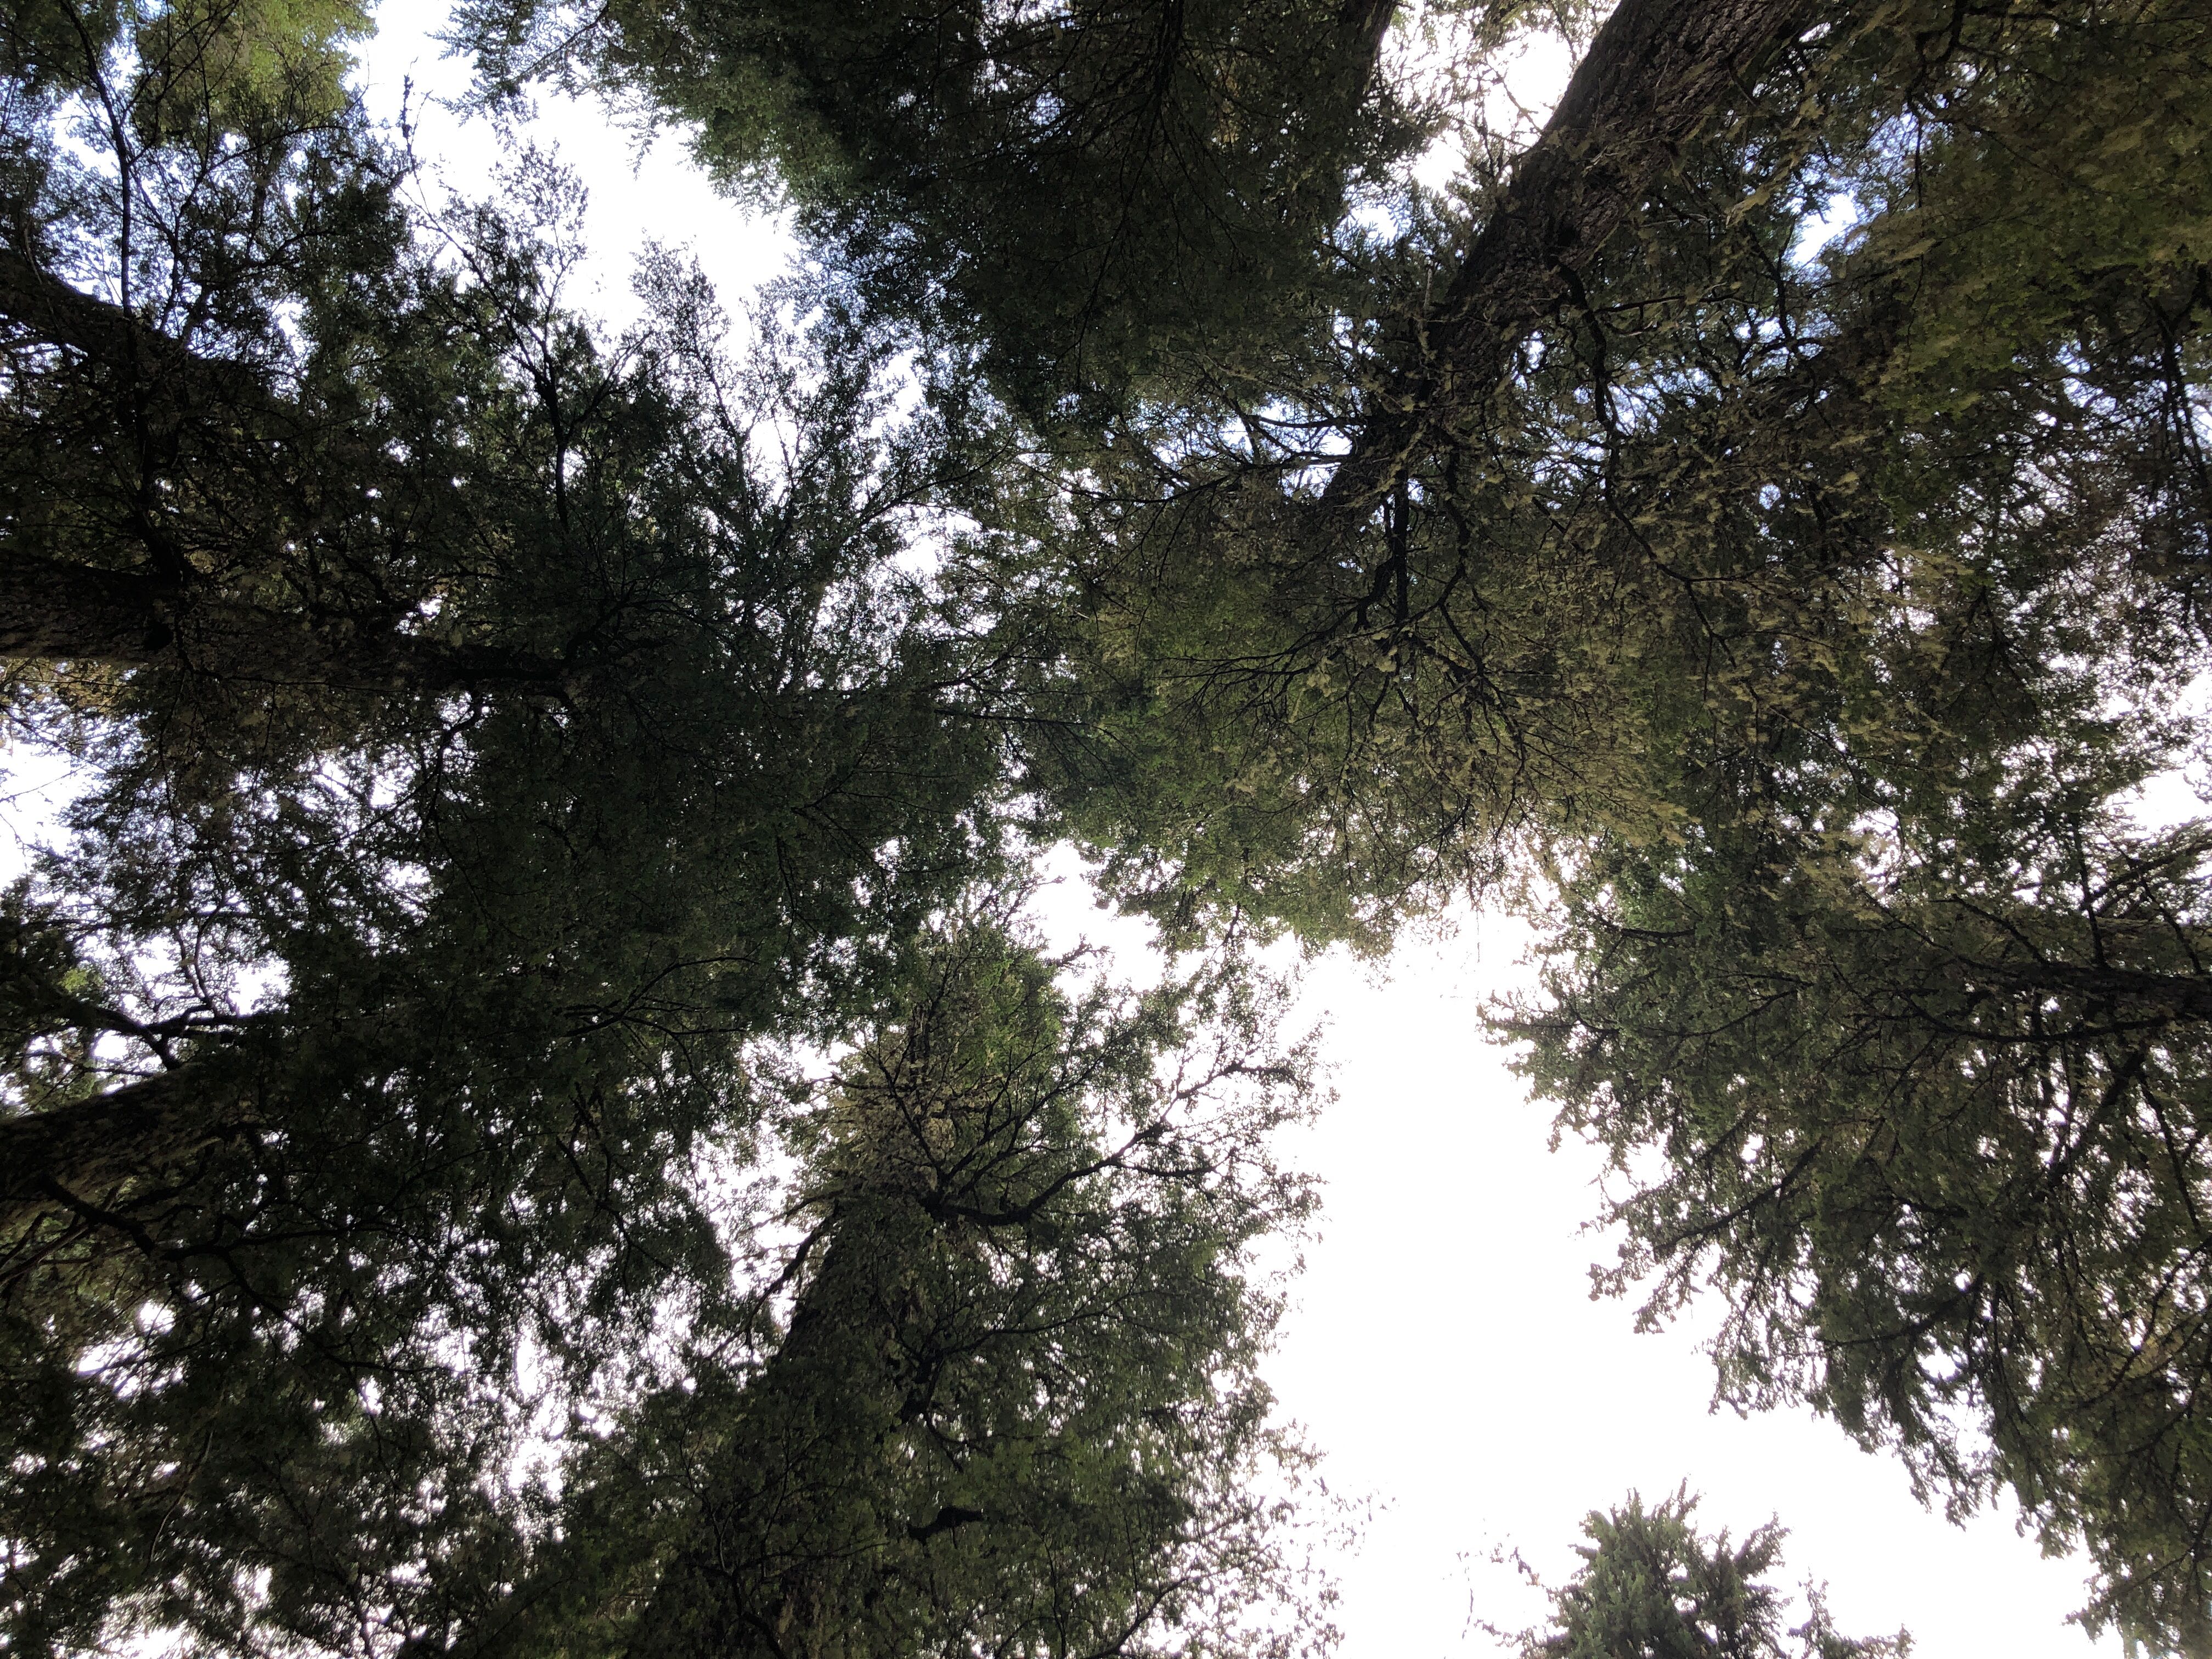 Image of evergreen needleleaved trees